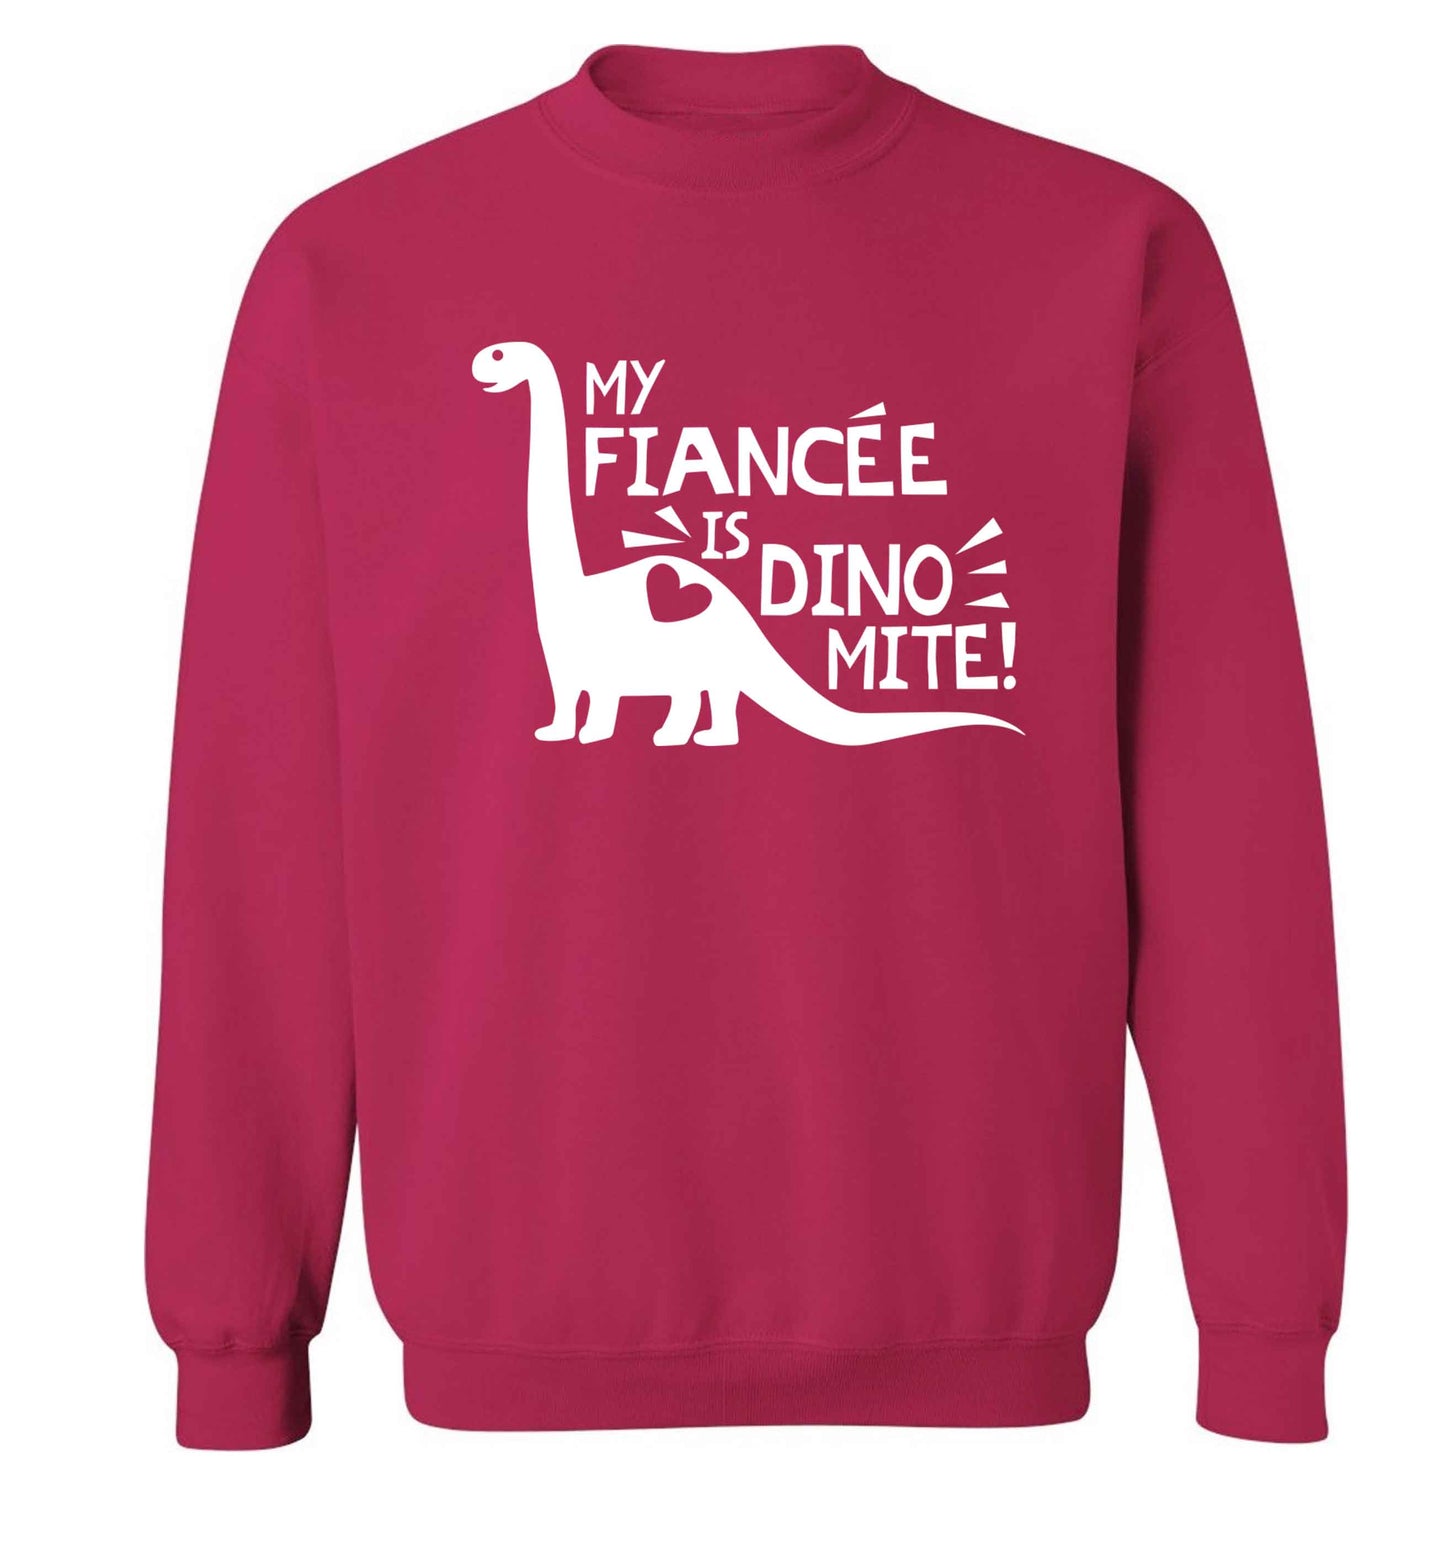 My fiancee is dinomite! Adult's unisex pink Sweater 2XL